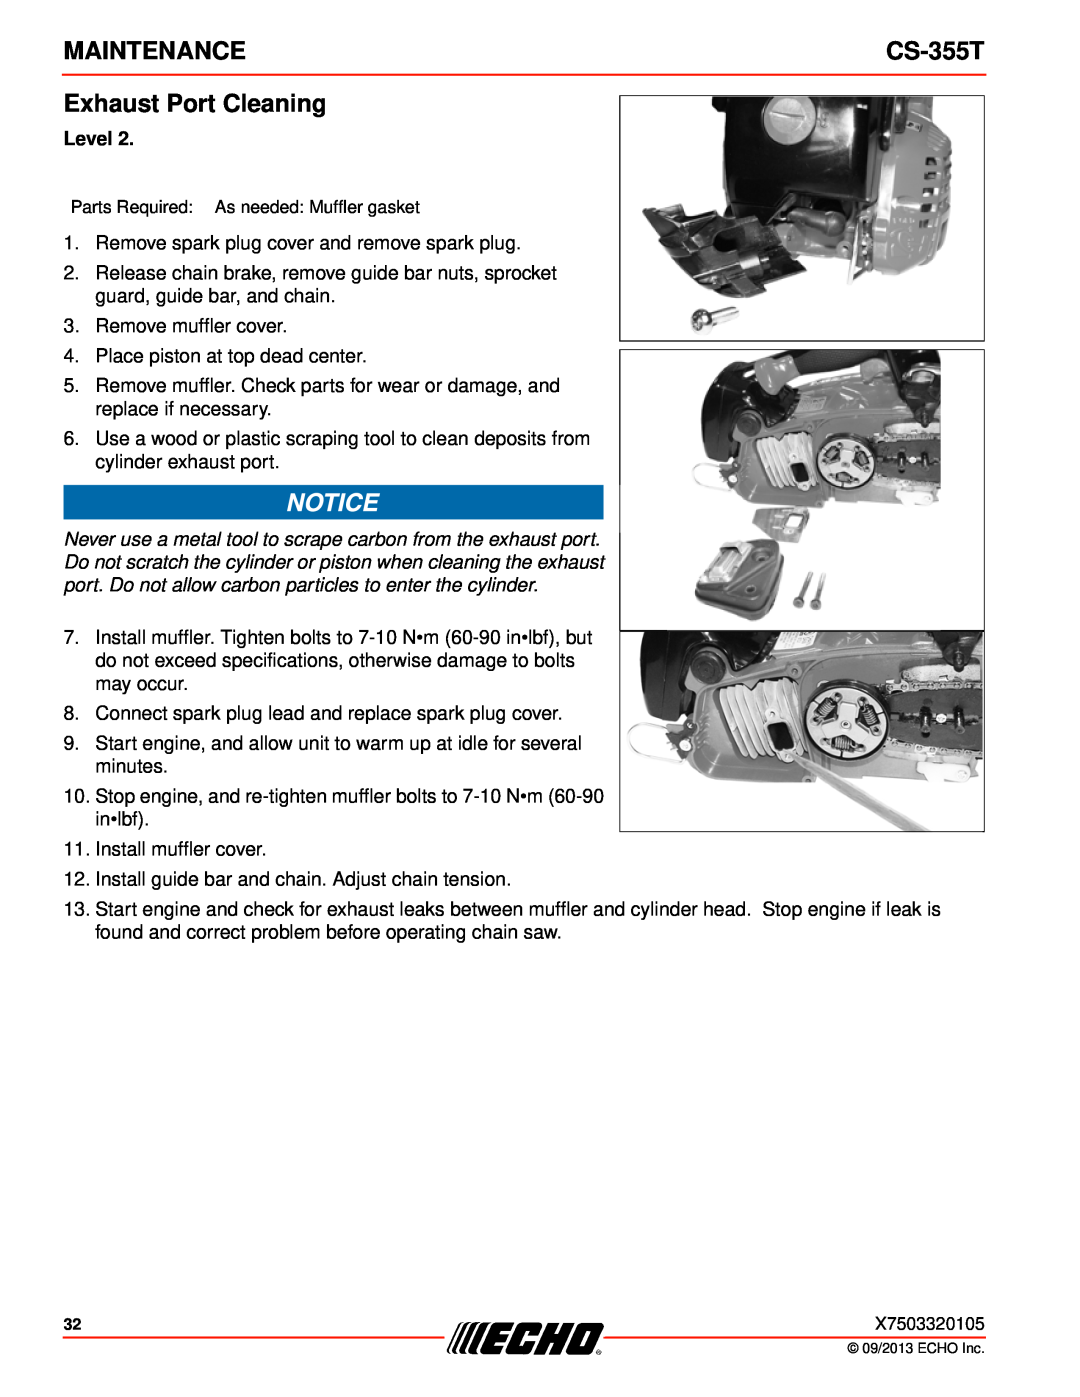 Echo CS-355T instruction manual Exhaust Port Cleaning, Level, Maintenance 